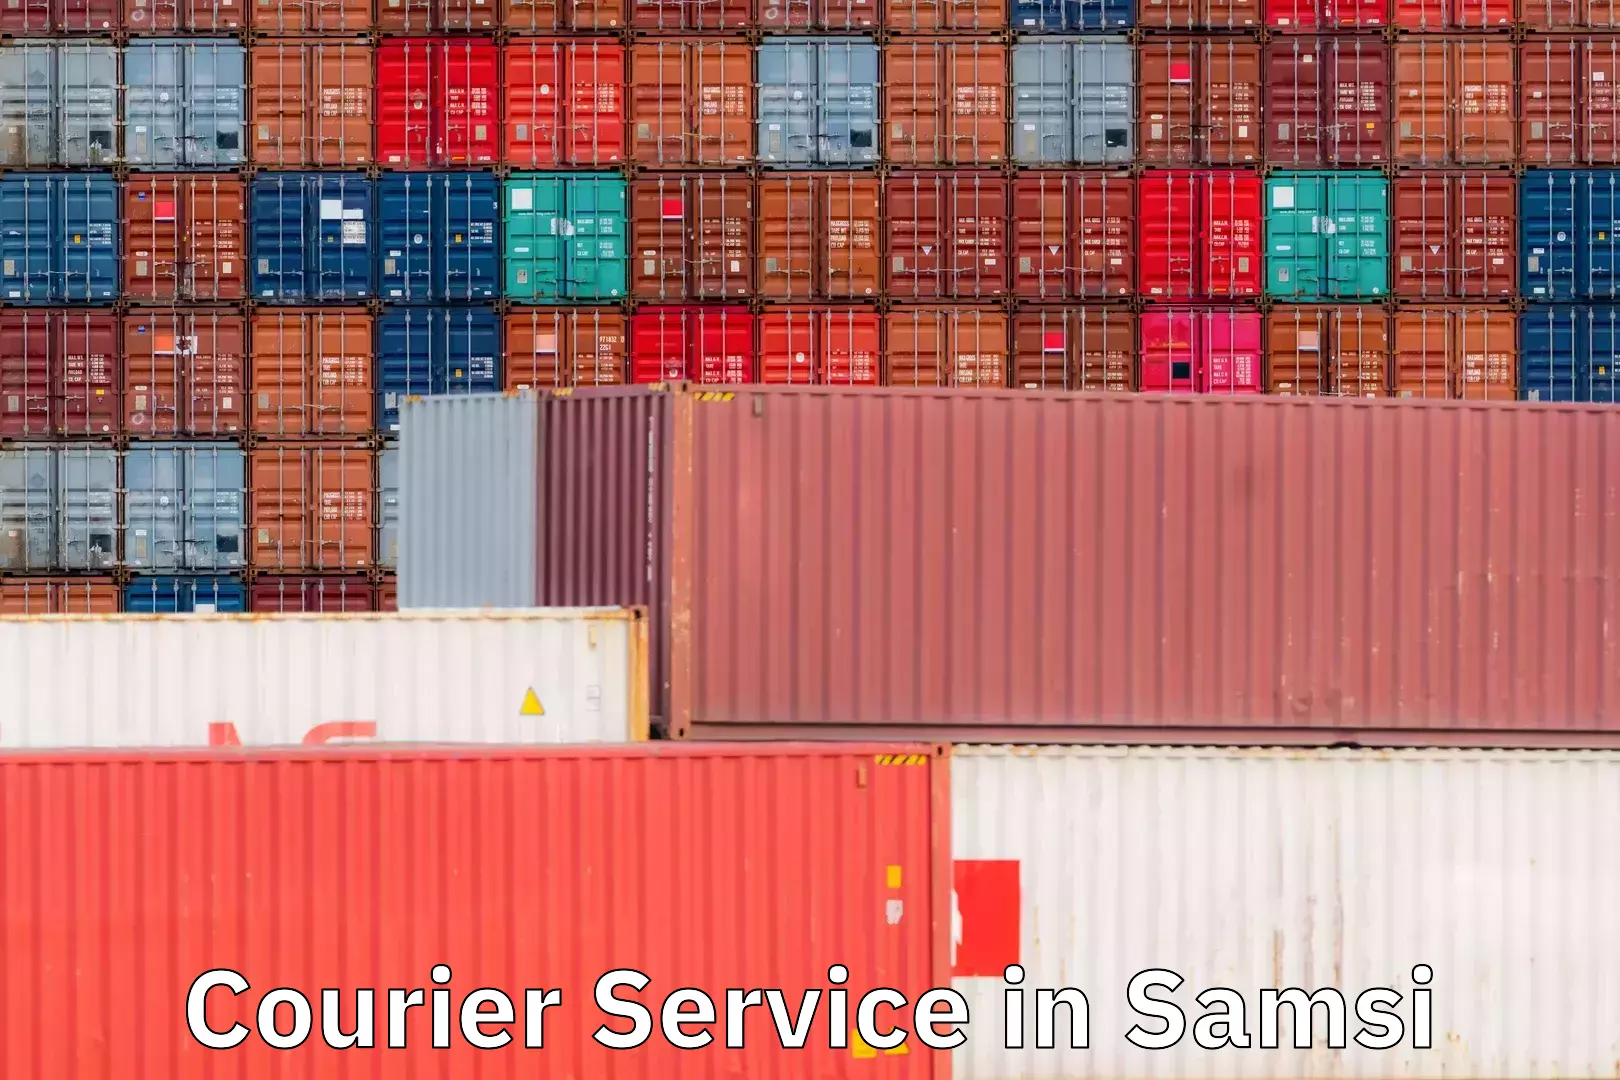 Specialized shipment handling in Samsi